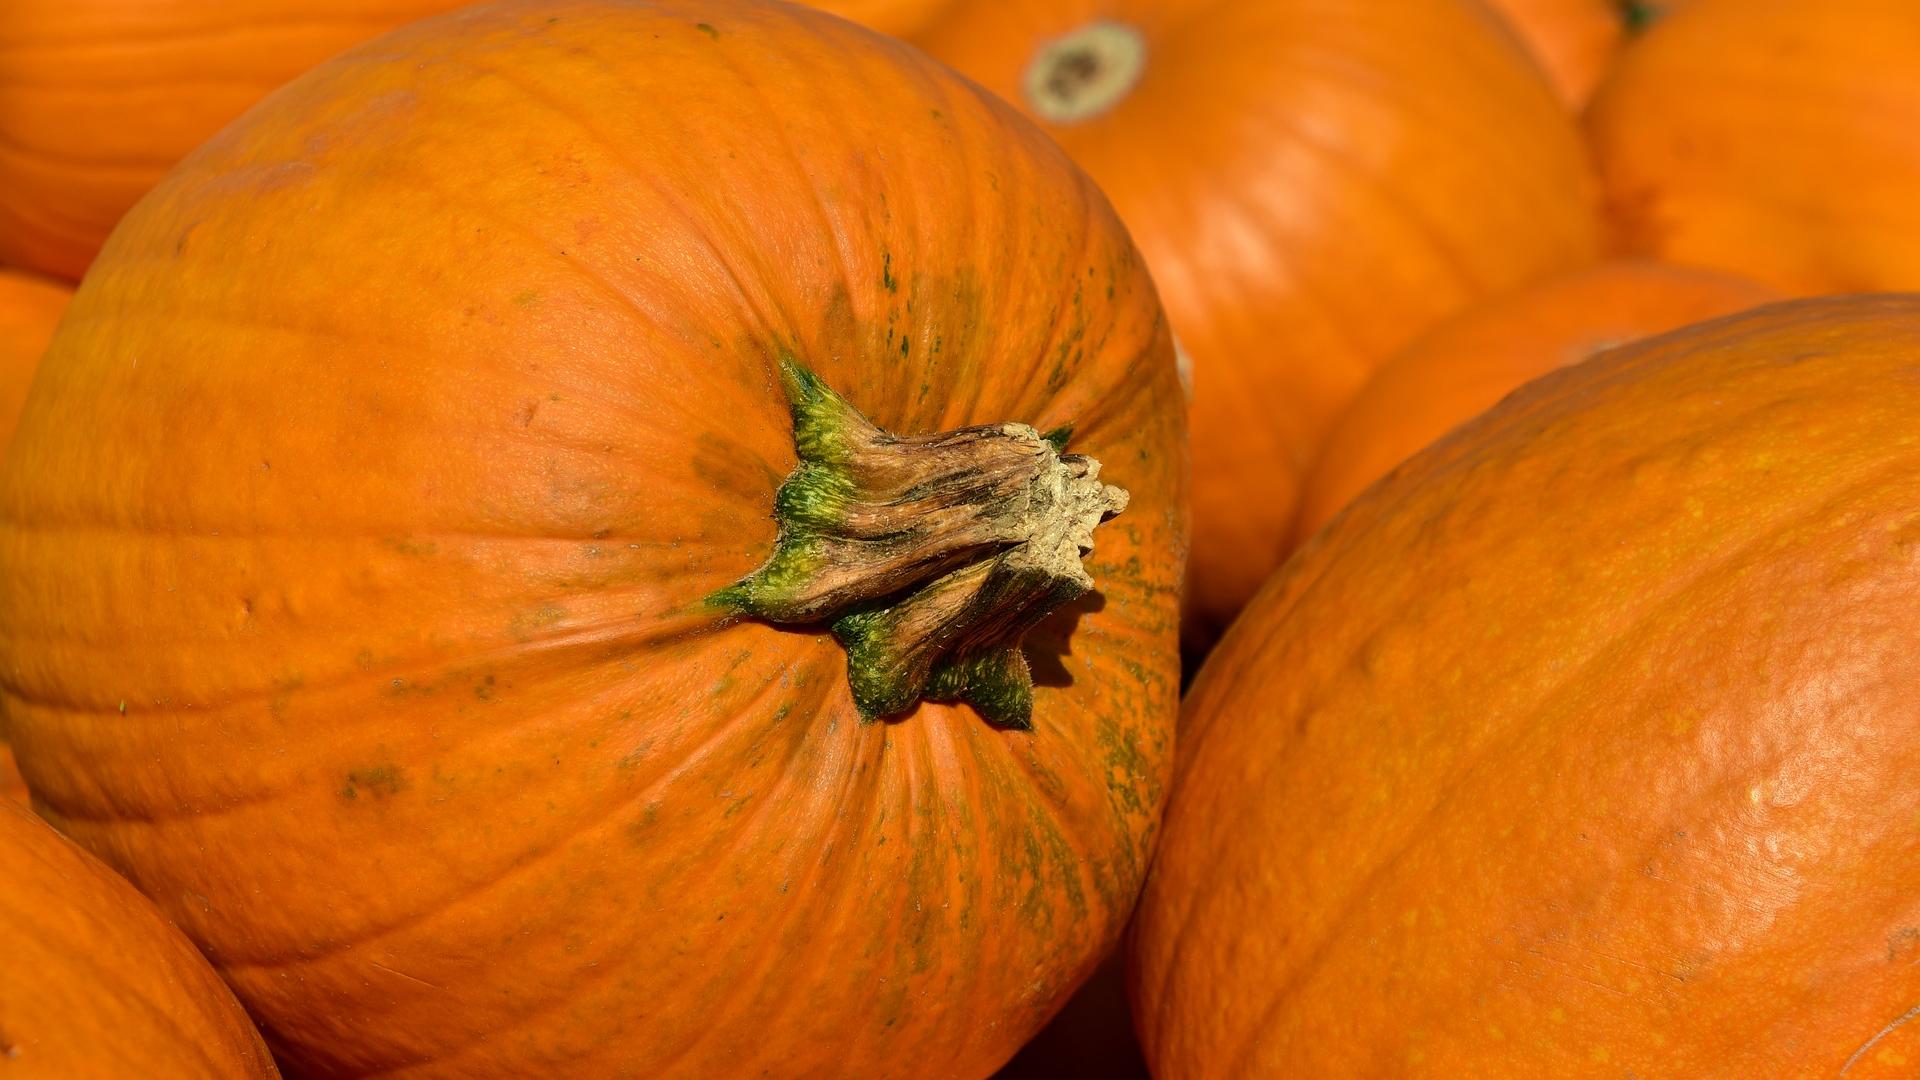 Close up of pumpkins